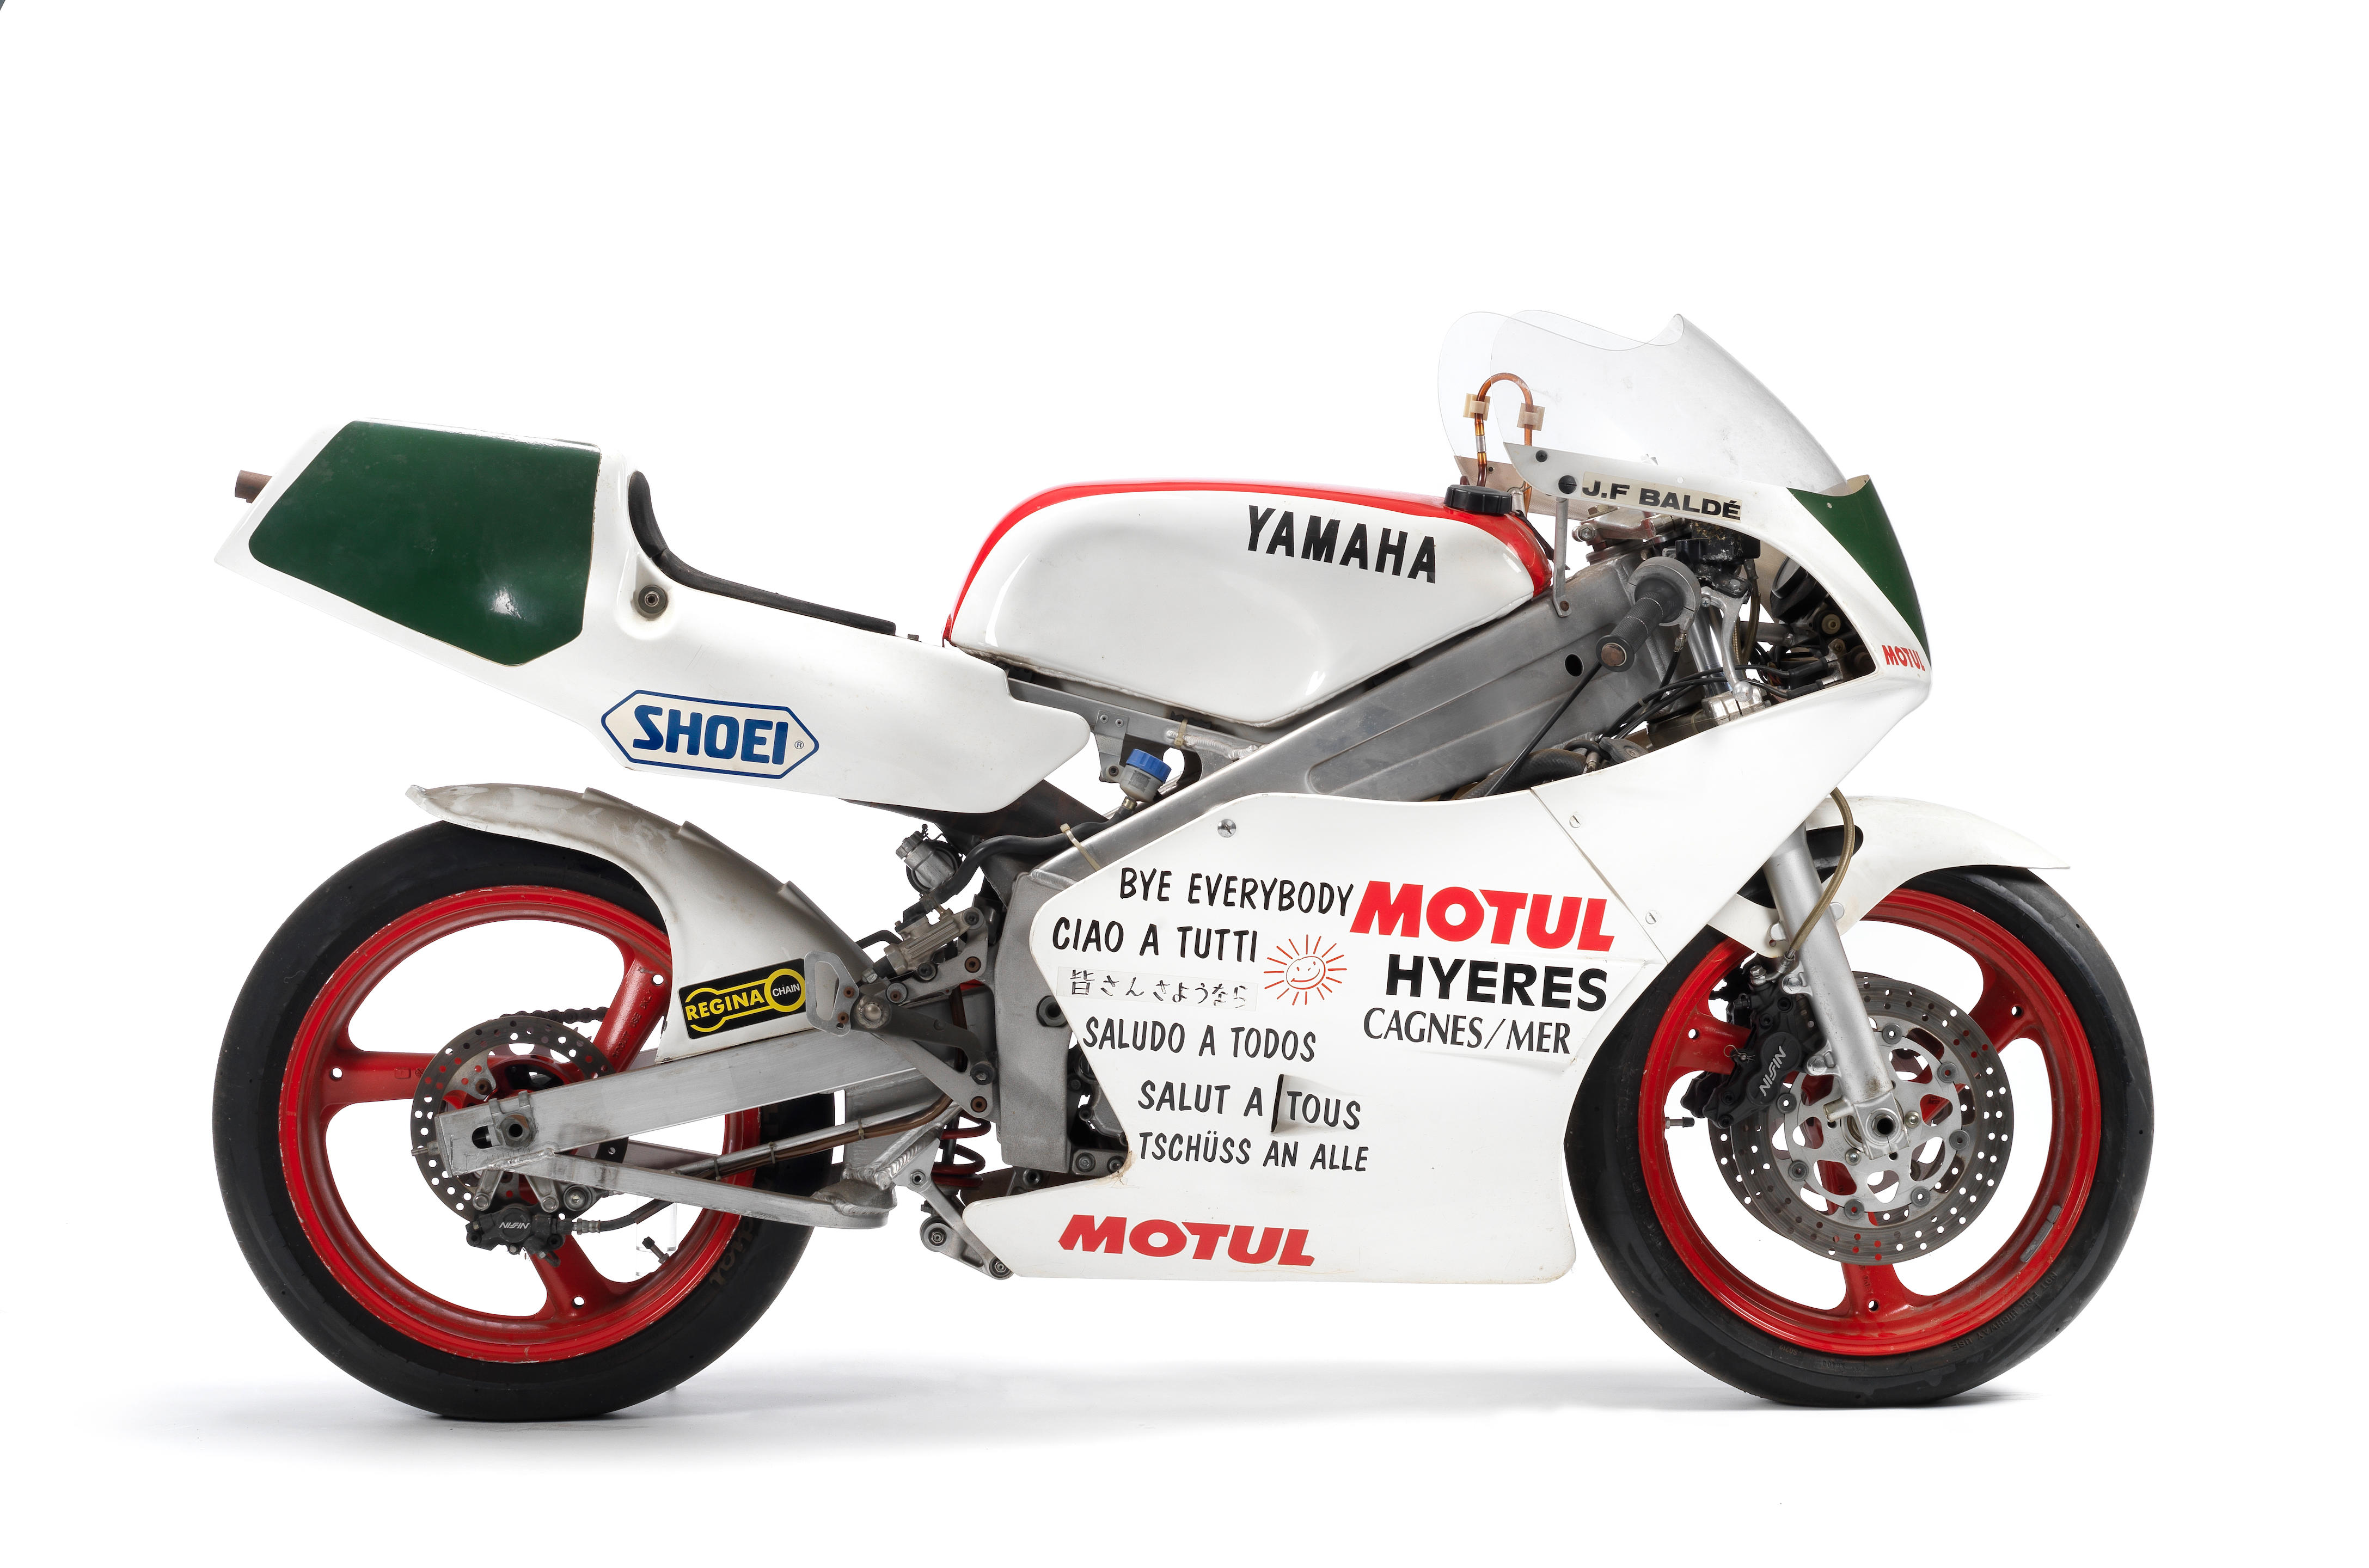 The ex-Jean-Francois Baldé 1989 Yamaha TZ250W Grand Prix Racing Motorcycle...